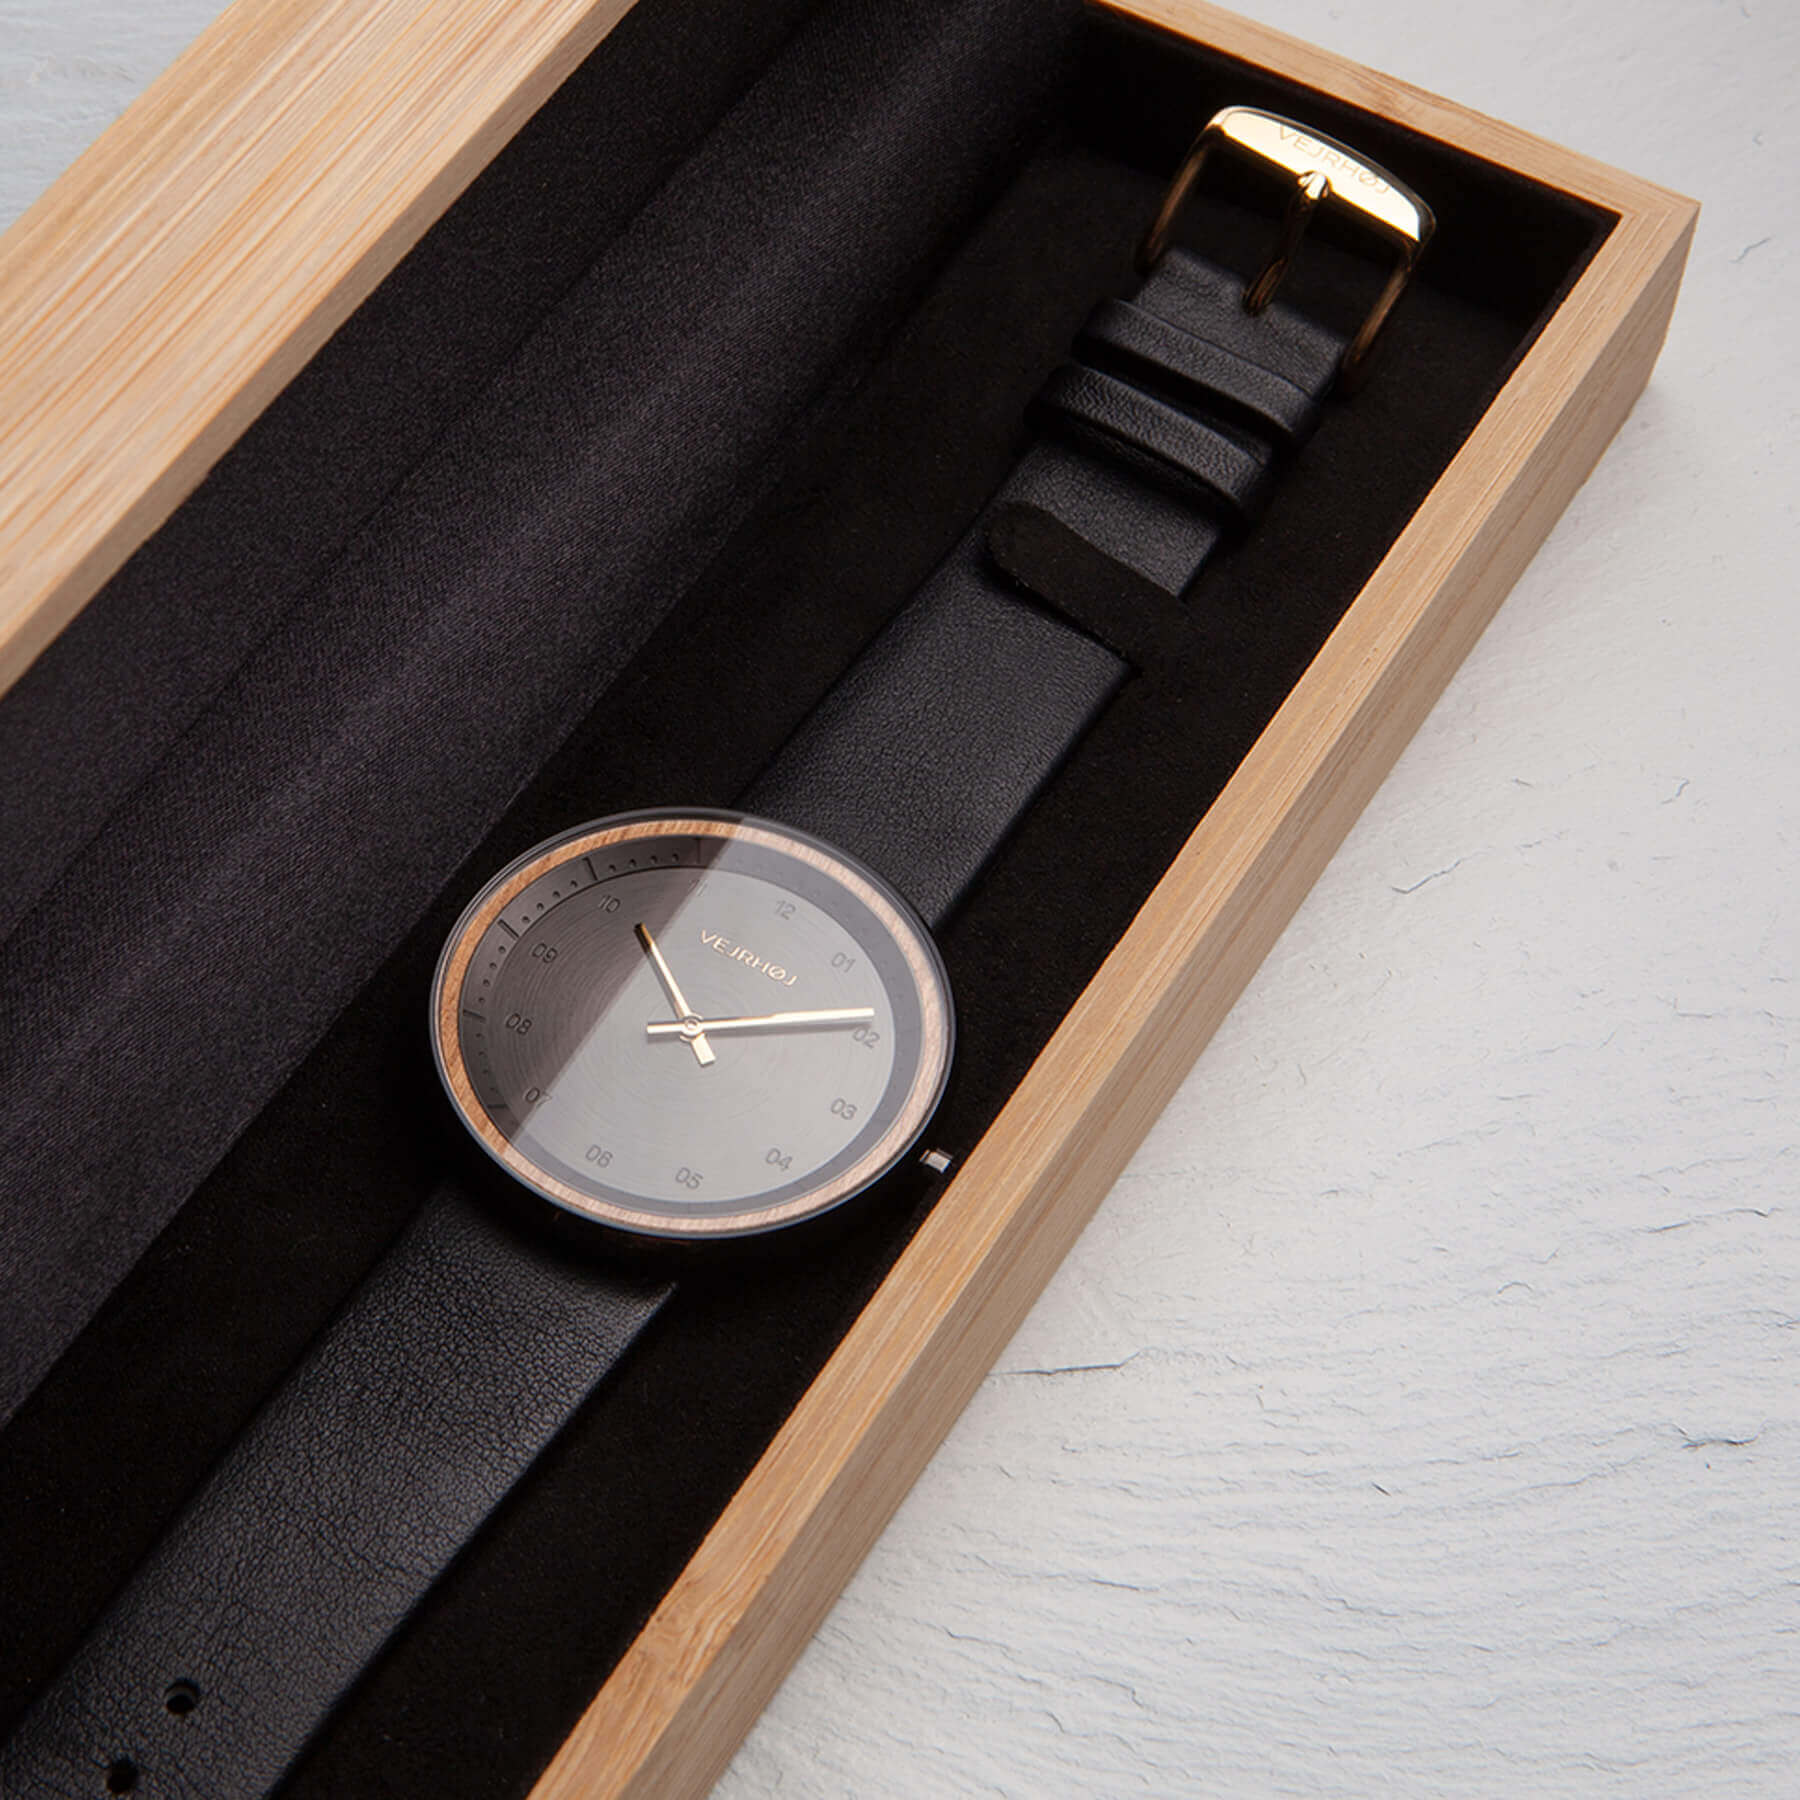 Elegant black watch in wooden box